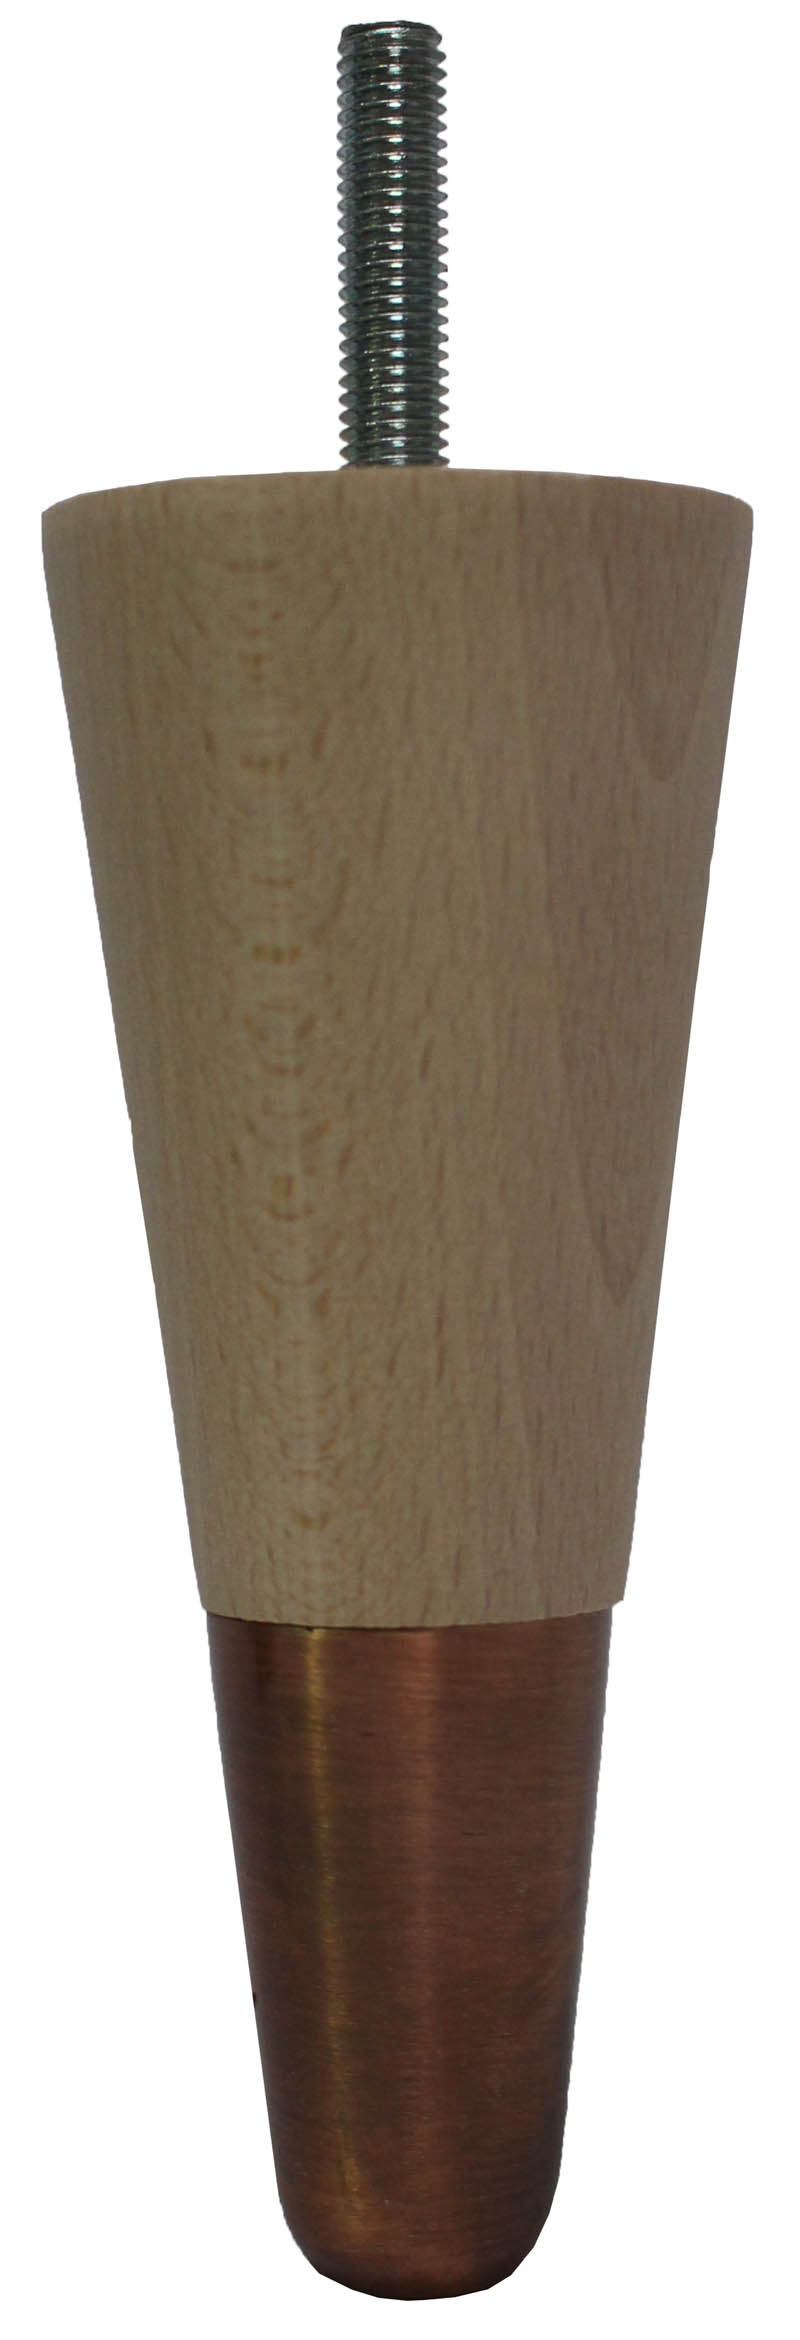 Azalea Tapered Furniture Legs - Raw Finish - Oiled Bronze Slipper Cups - Set of 4